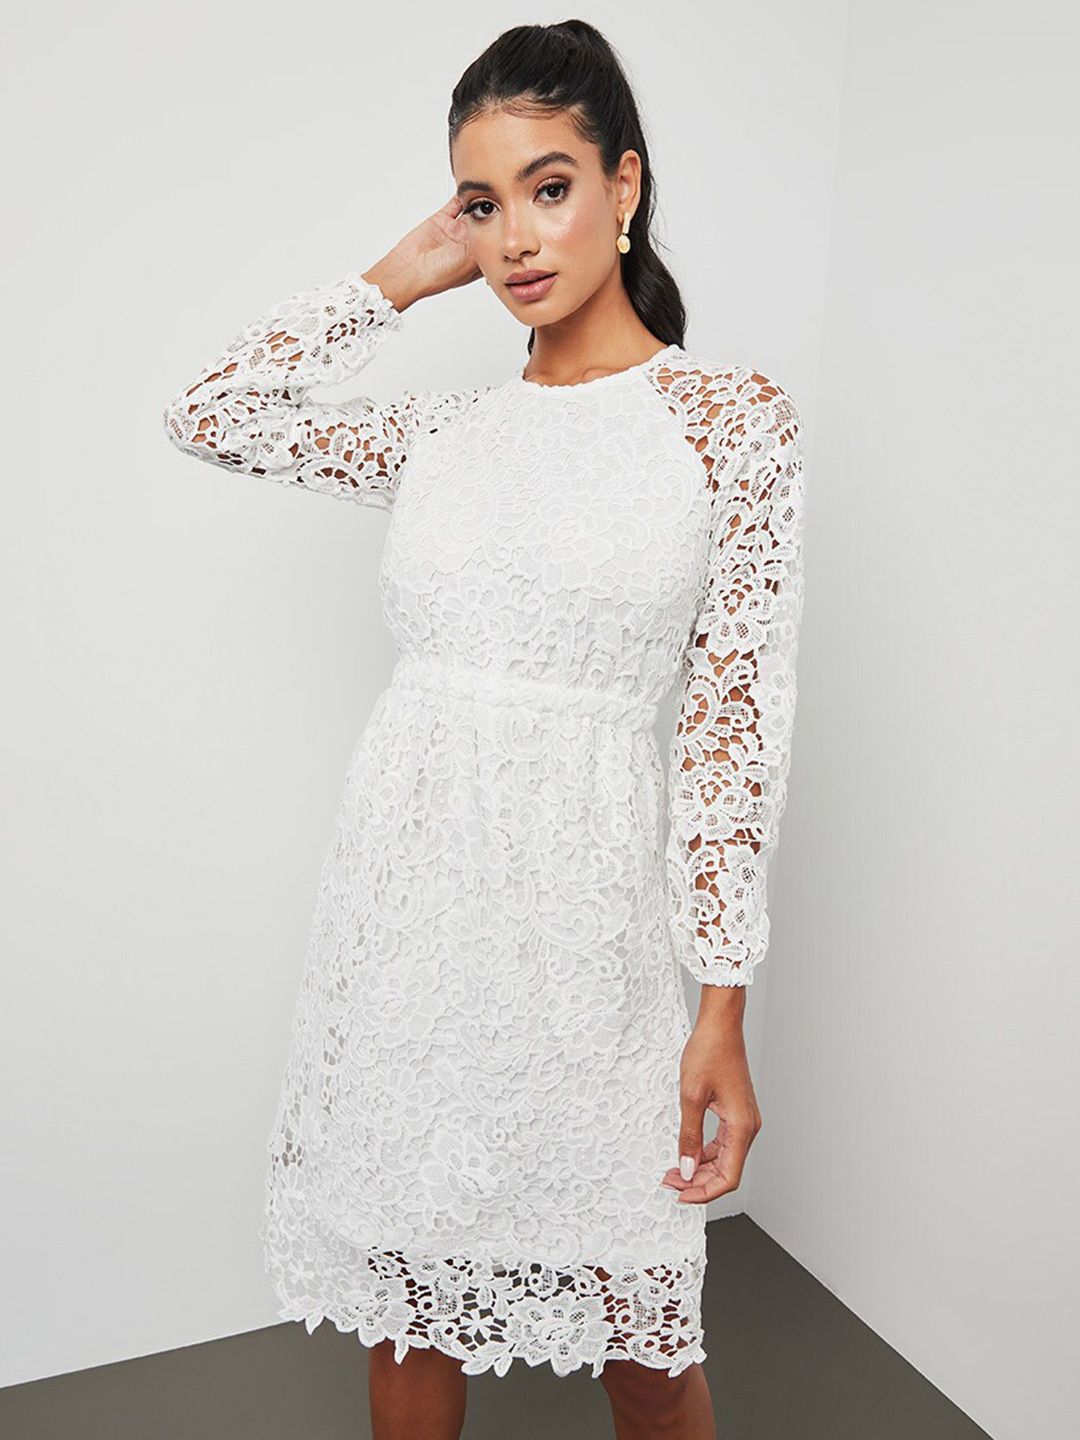 Styli White Maxi Dress Price in India